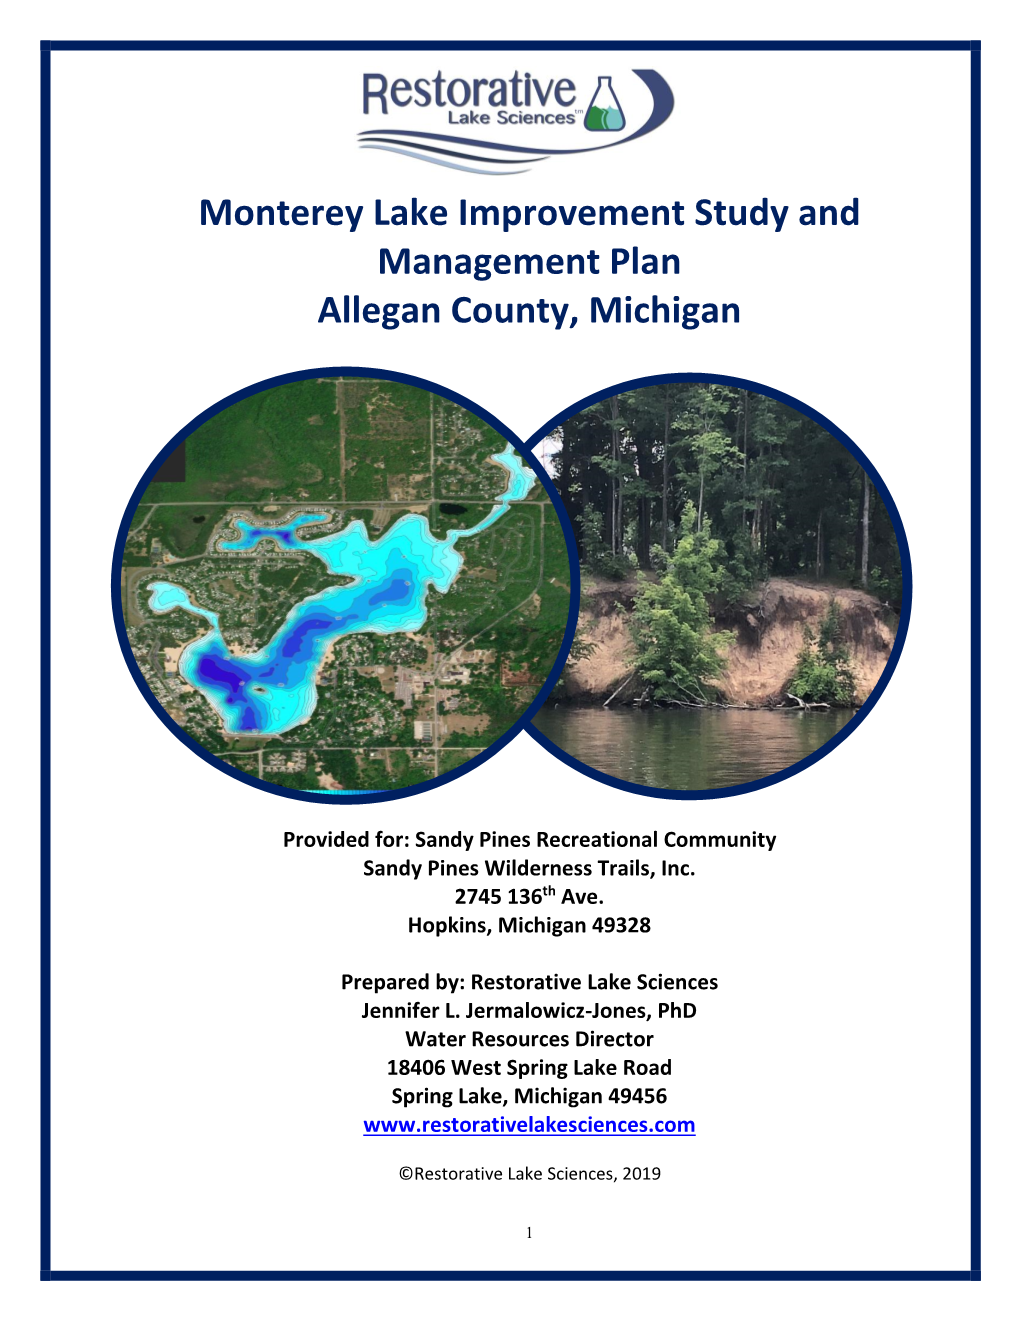 Monterey Lake Improvement Study and Management Plan Allegan County, Michigan